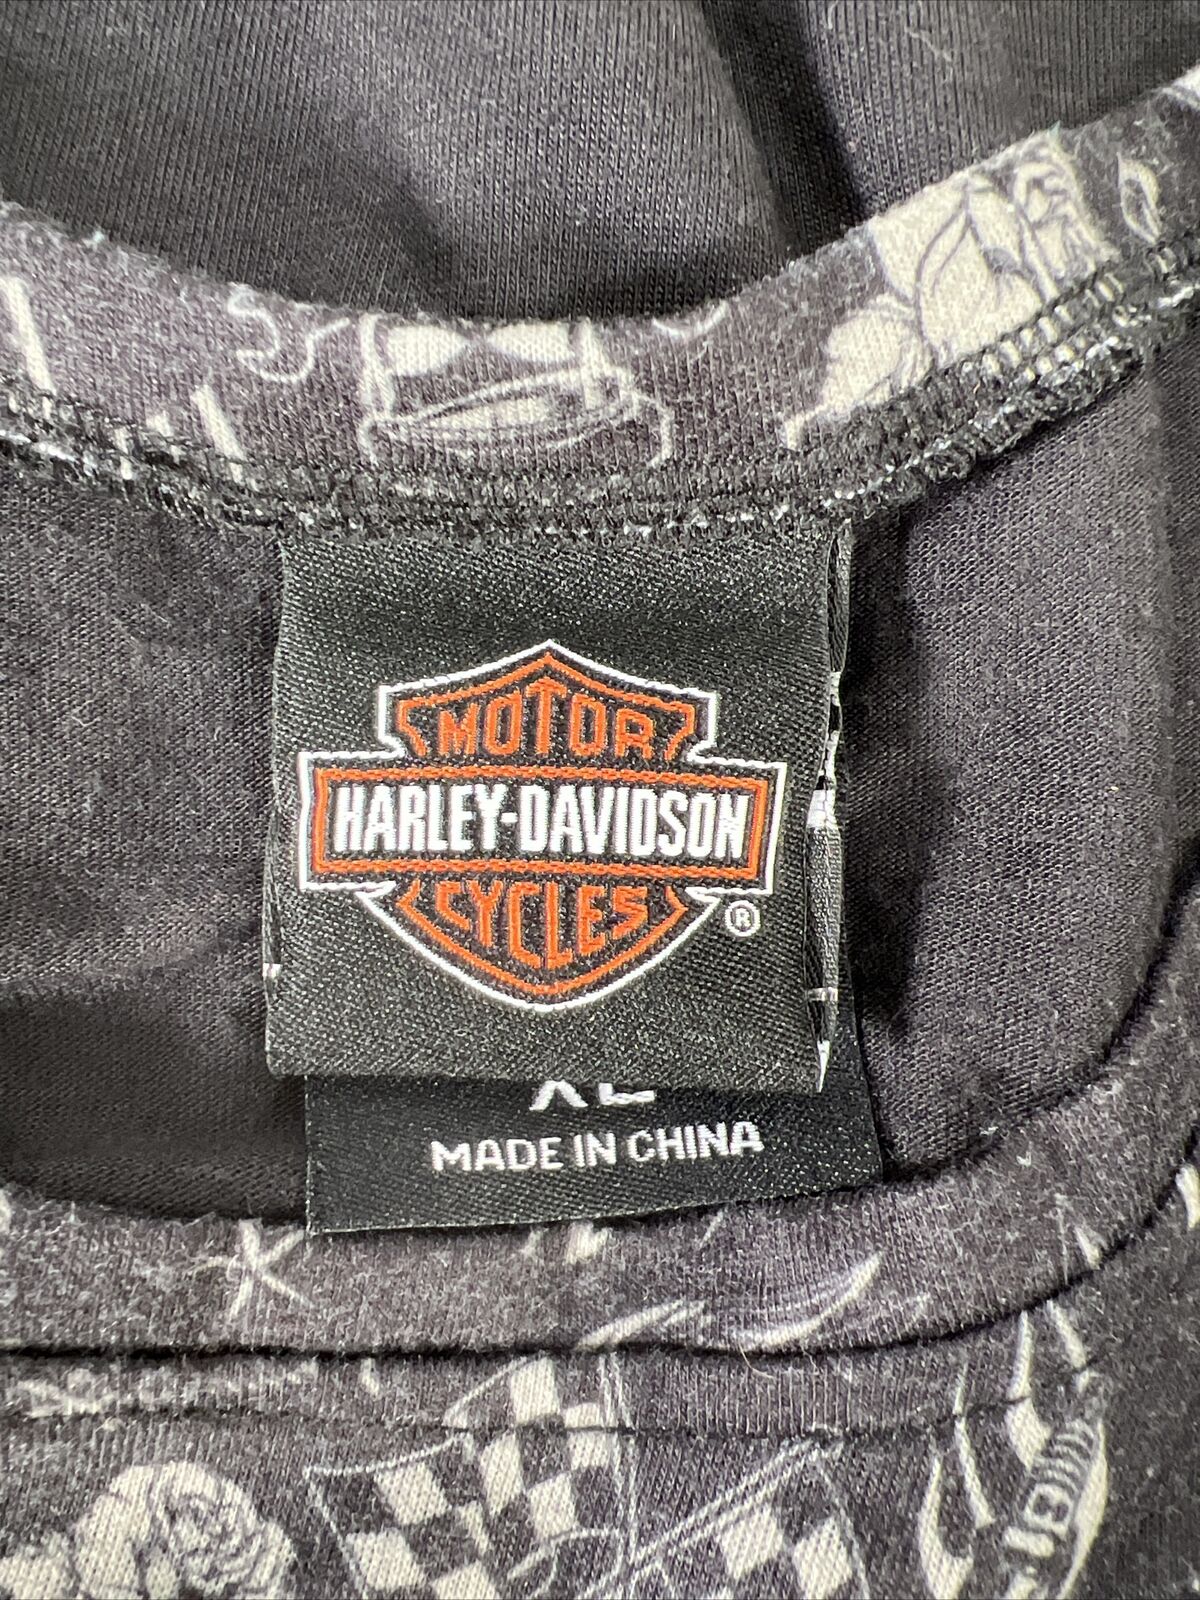 Harley-Davidson Women's Black Short Sleeve Graphic T-Shirt - XL